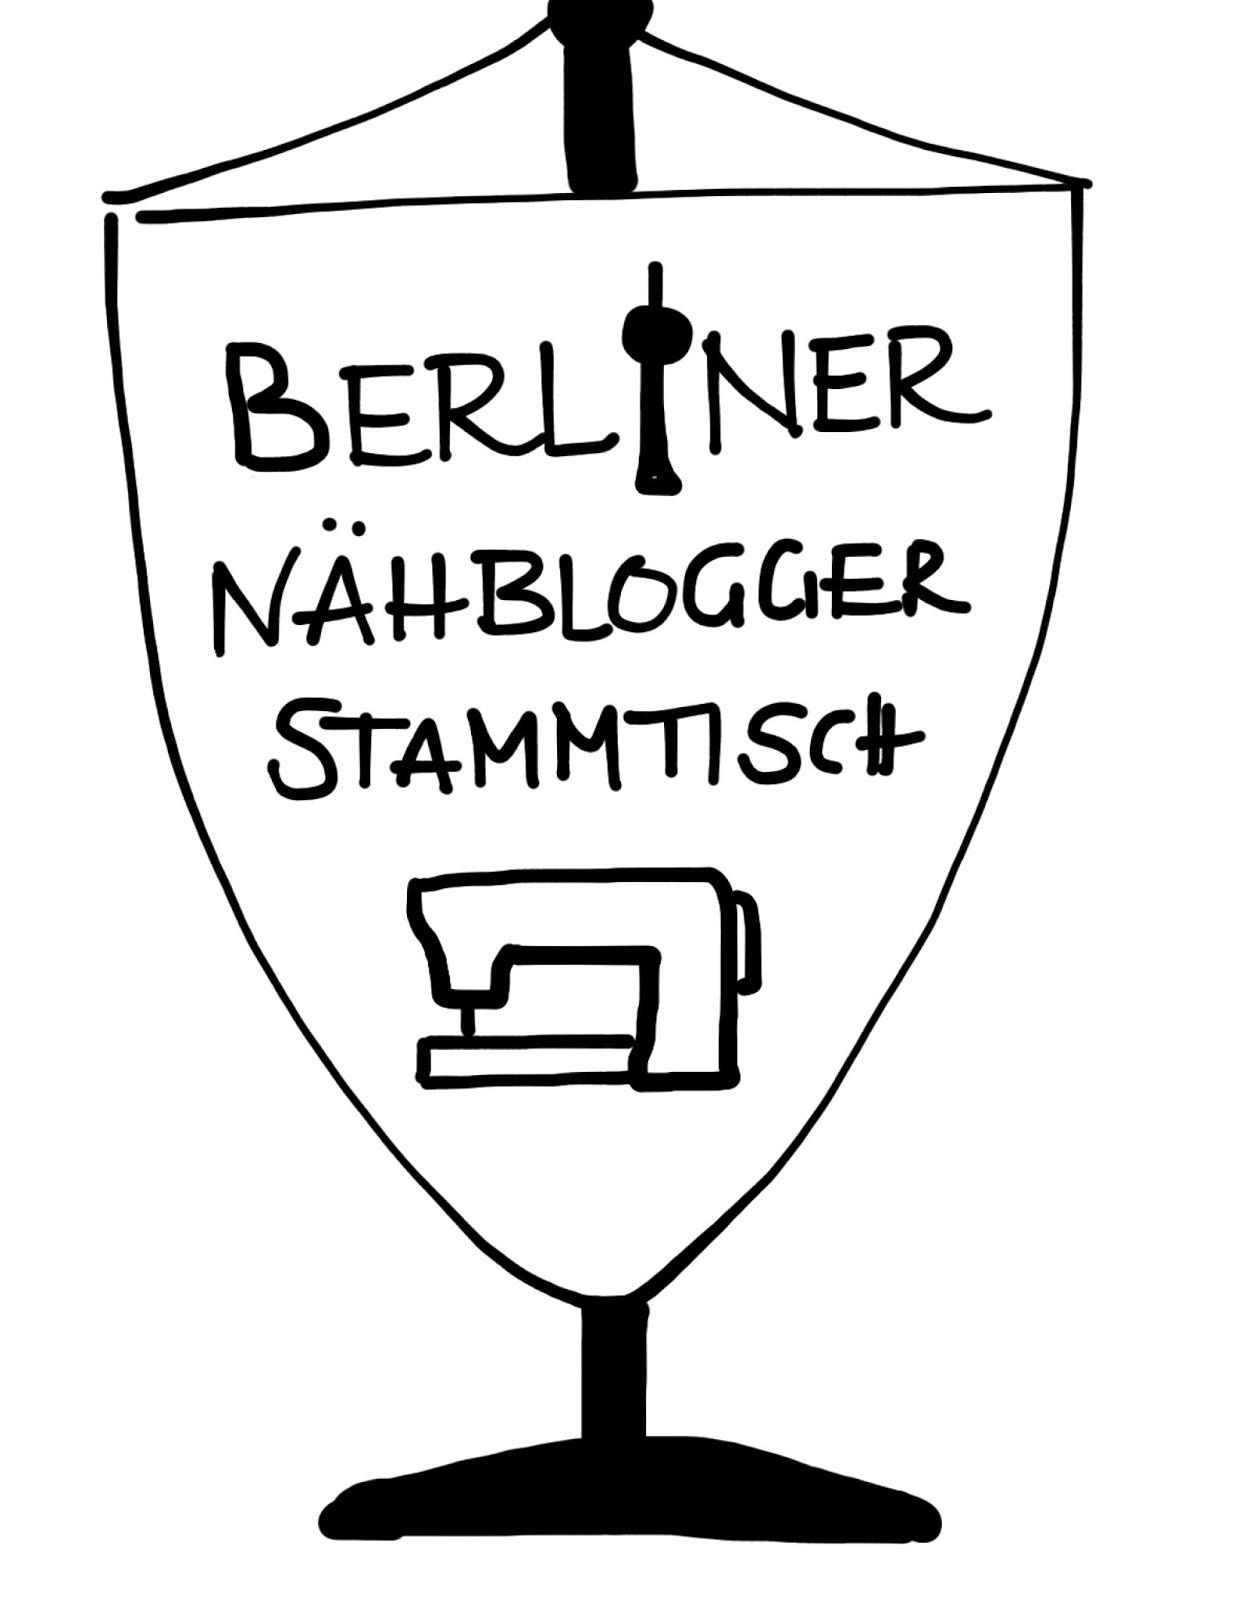 Berliner Nähblogger-Stammtisch